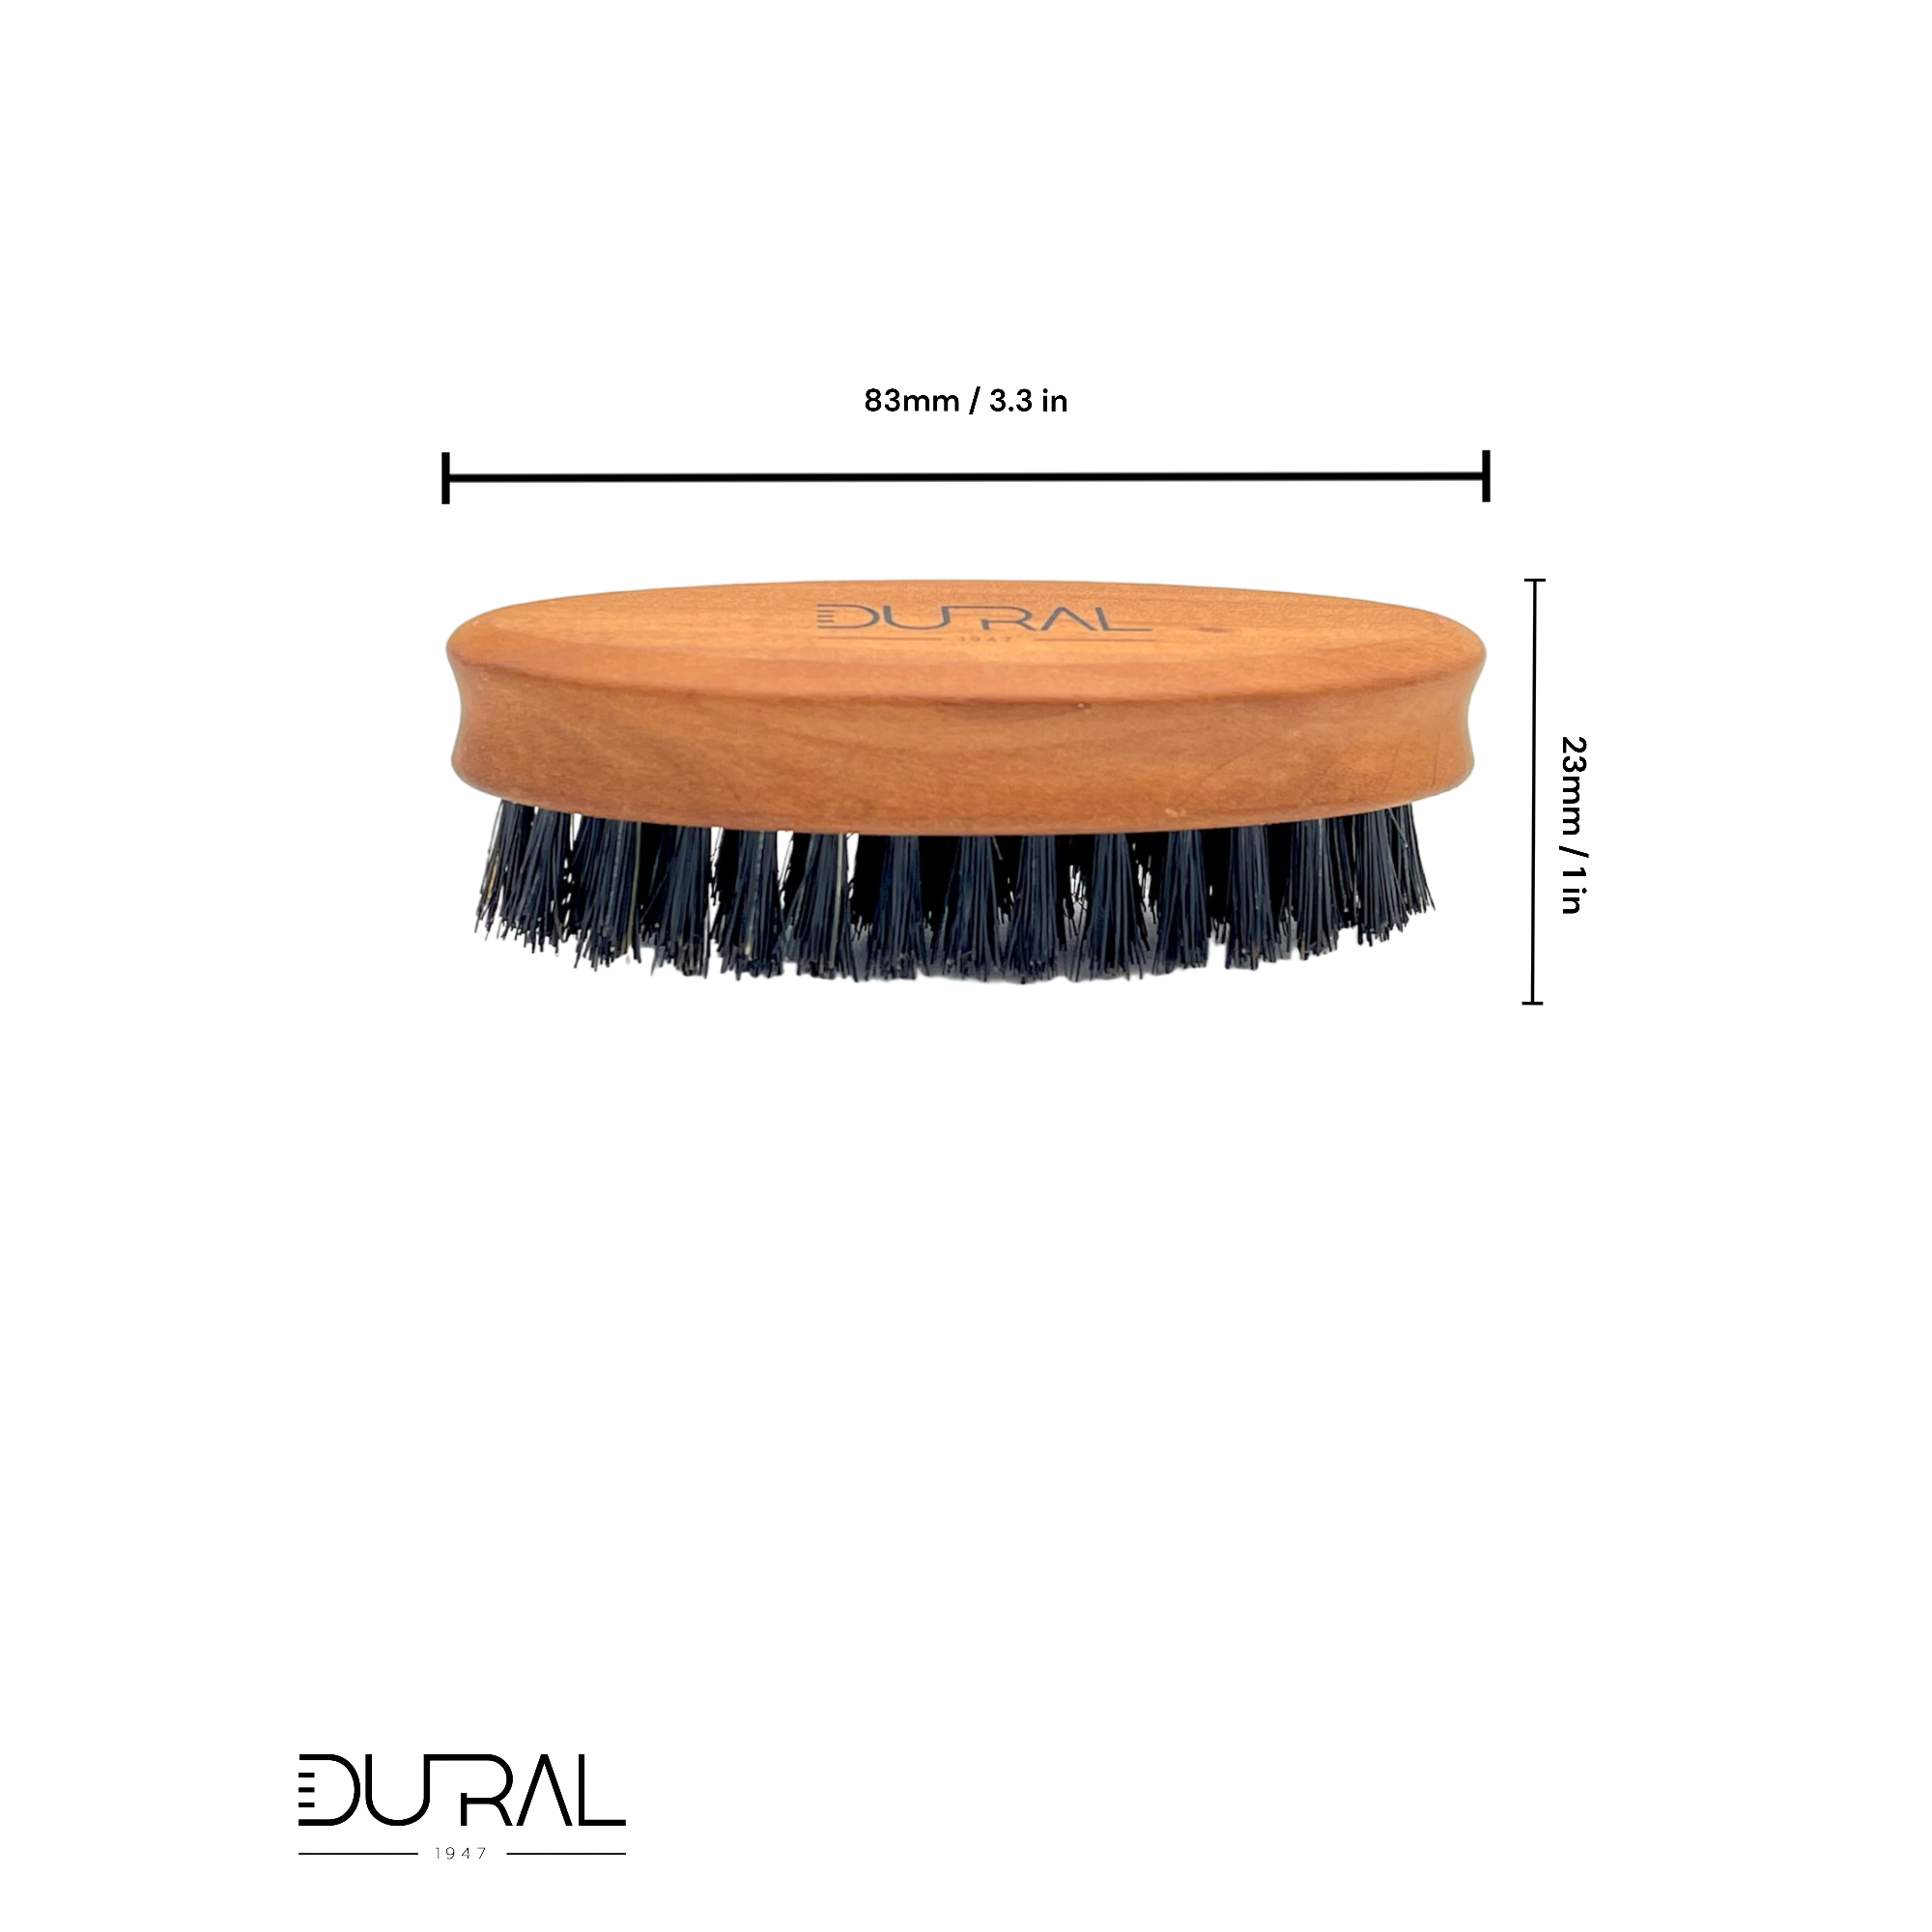 Dural Pear wood beard brush with soft natural bristles